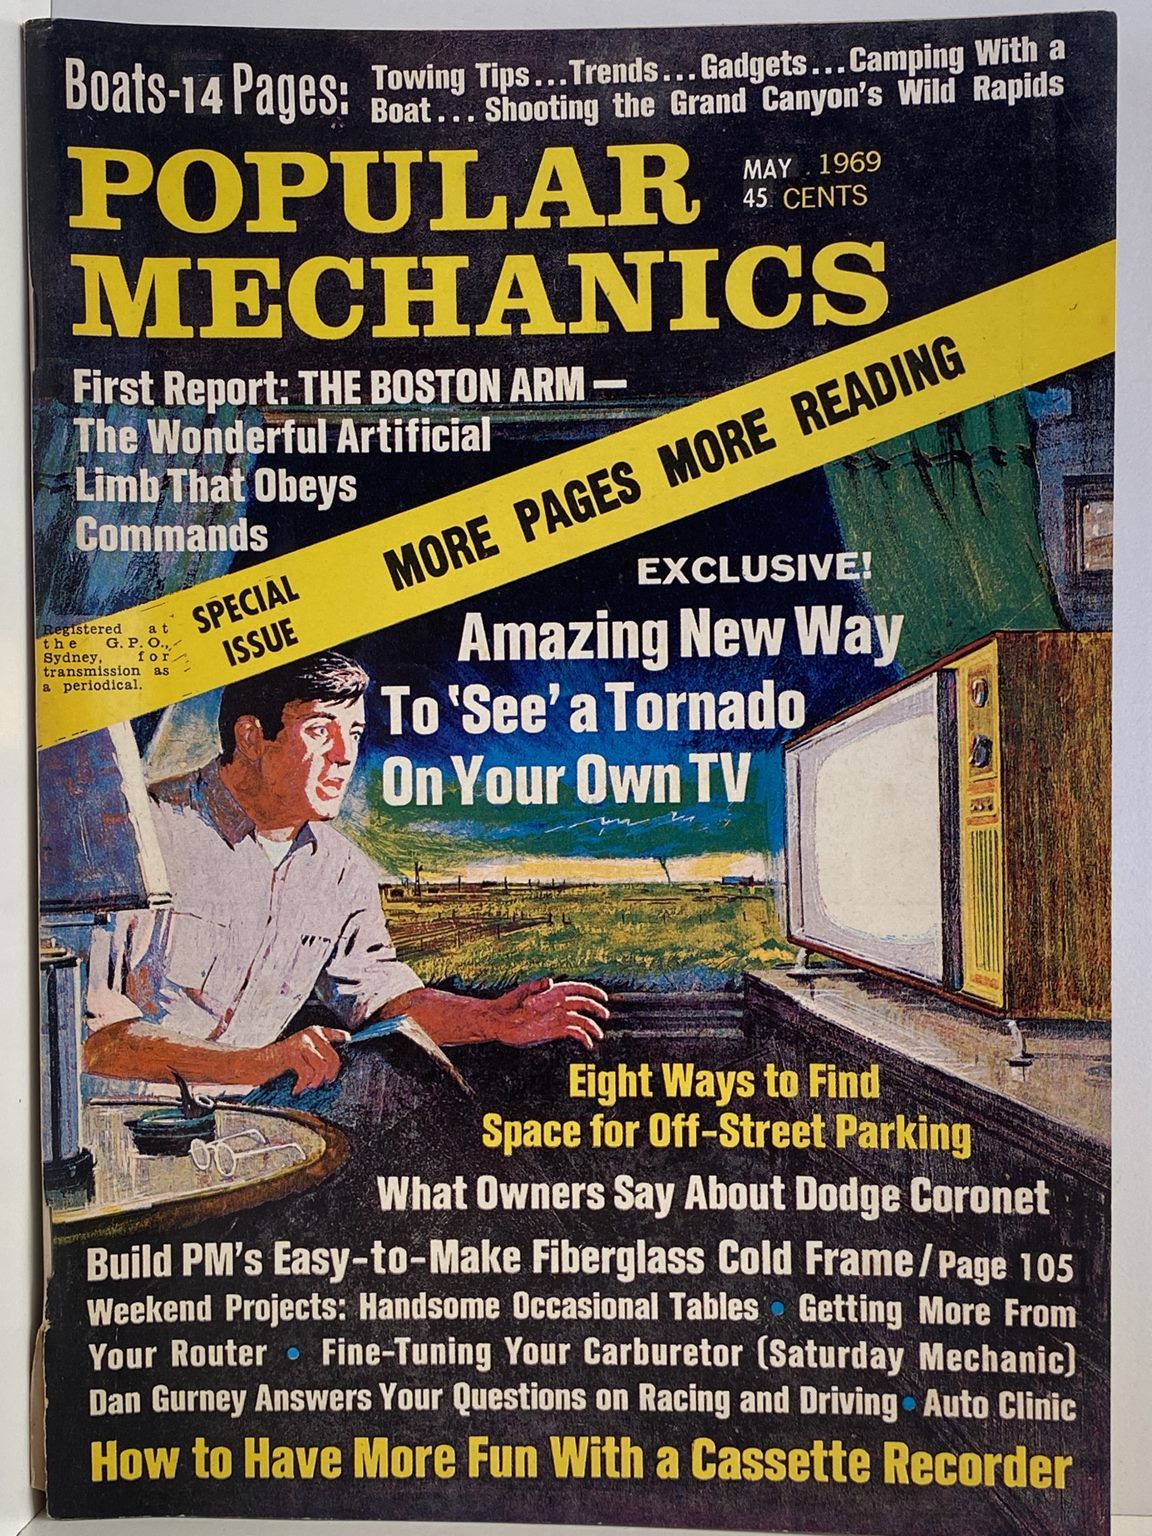 VINTAGE MAGAZINE: Popular Mechanics - Vol. 131, No. 3 - May 1969